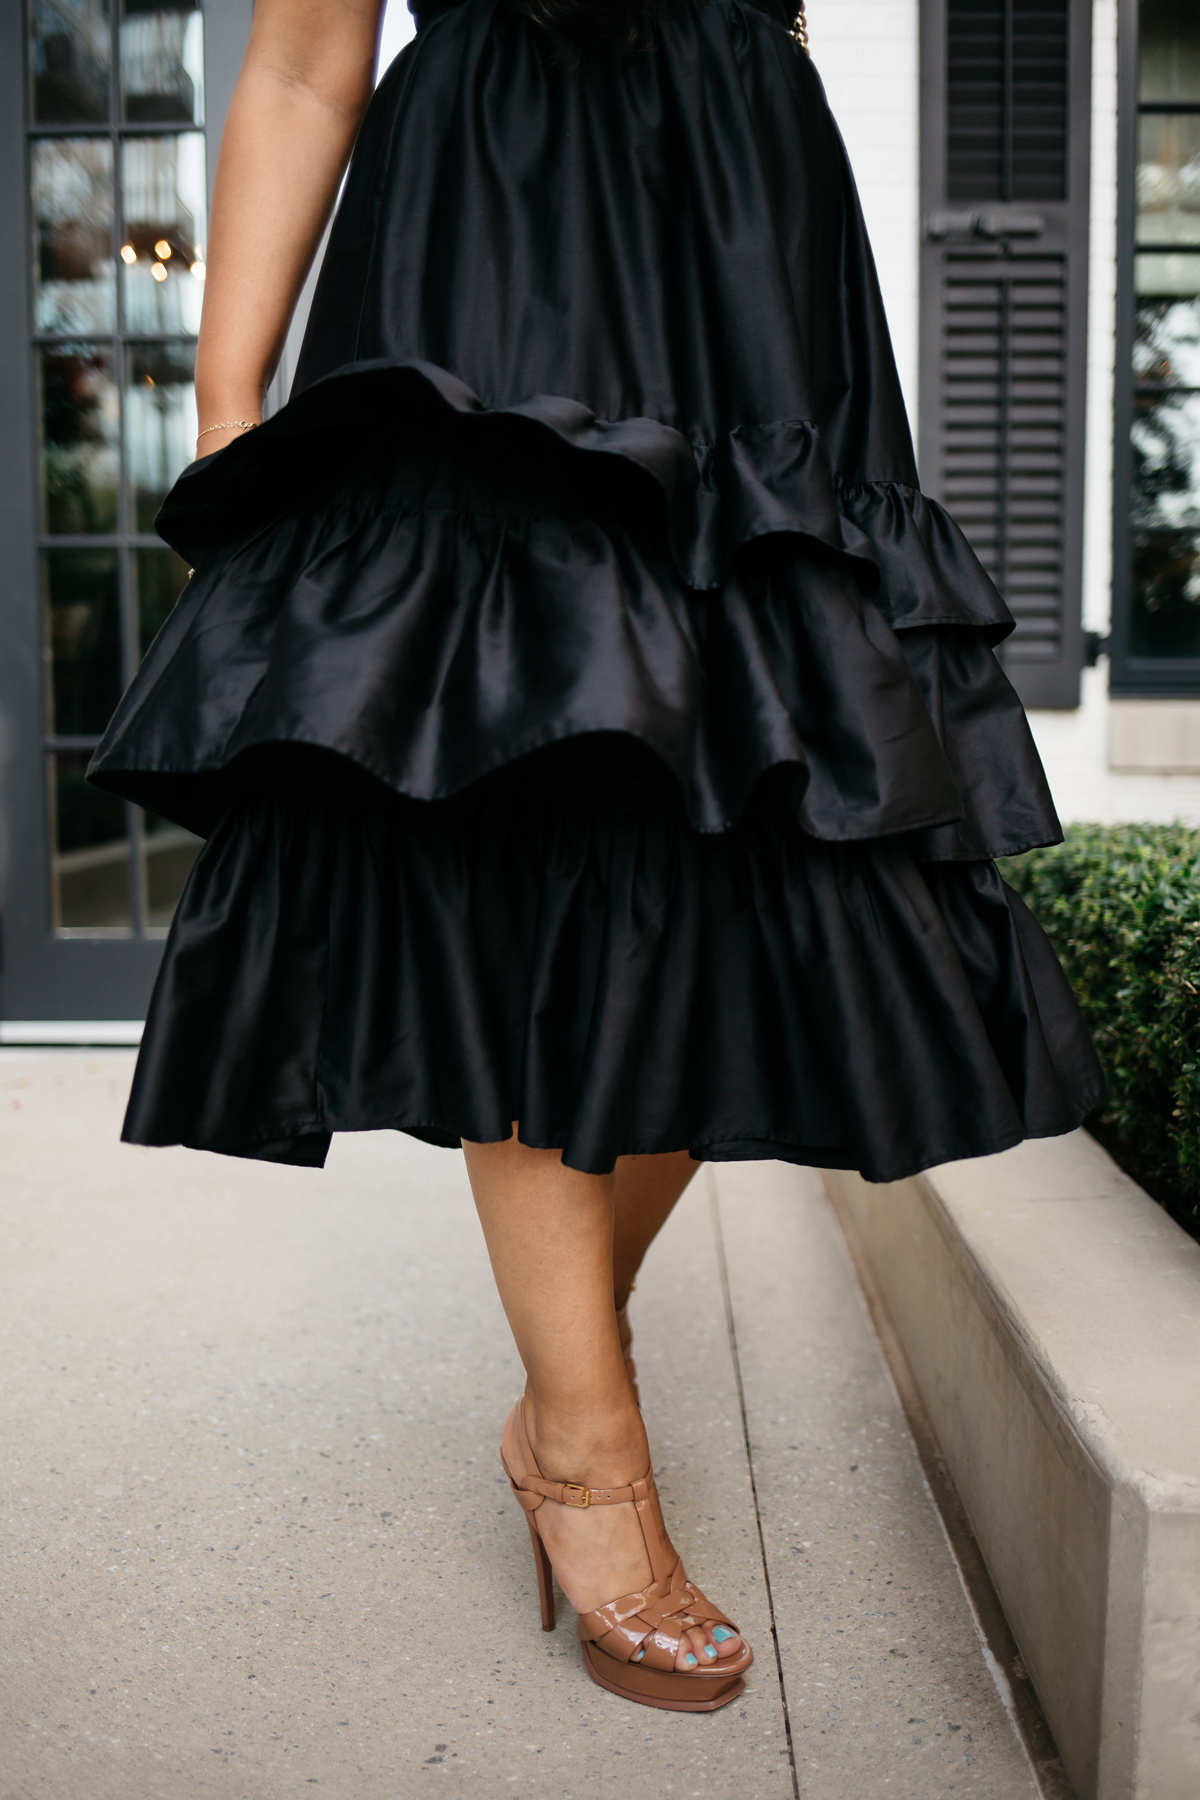 hm-black-ruffled-dress